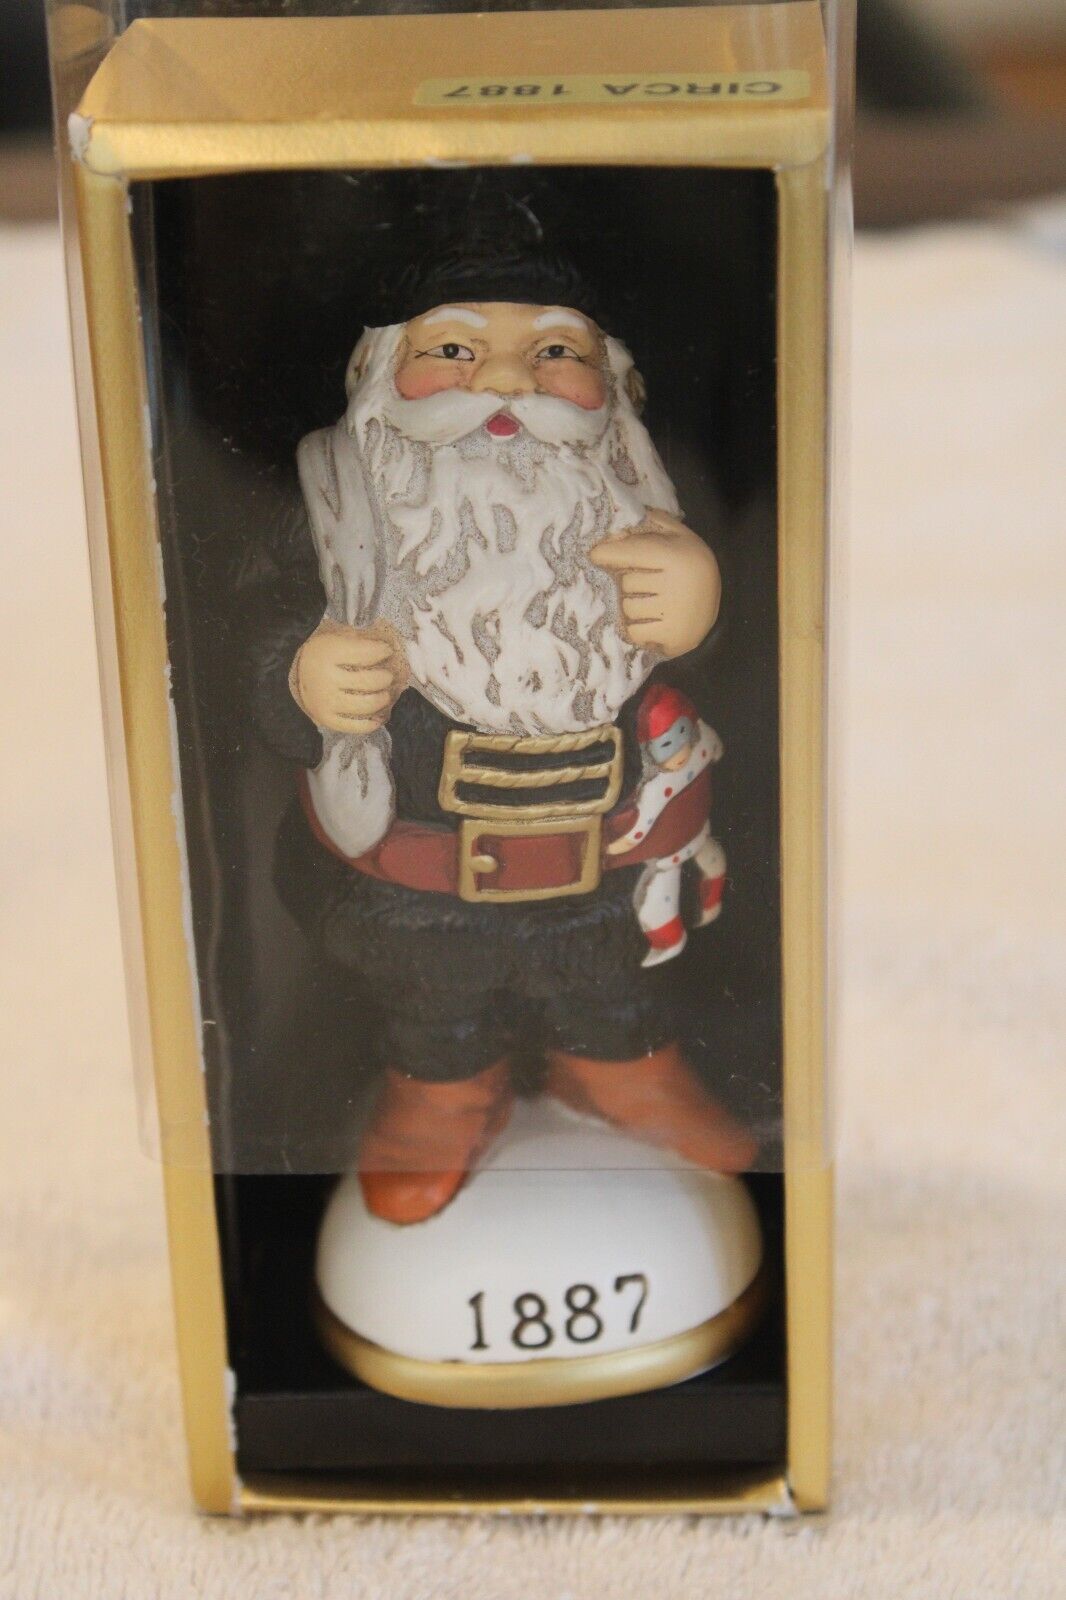 Vintage Memories Of Santa Christmas Ornament - Trojan Santa Claus USA Circa 1887